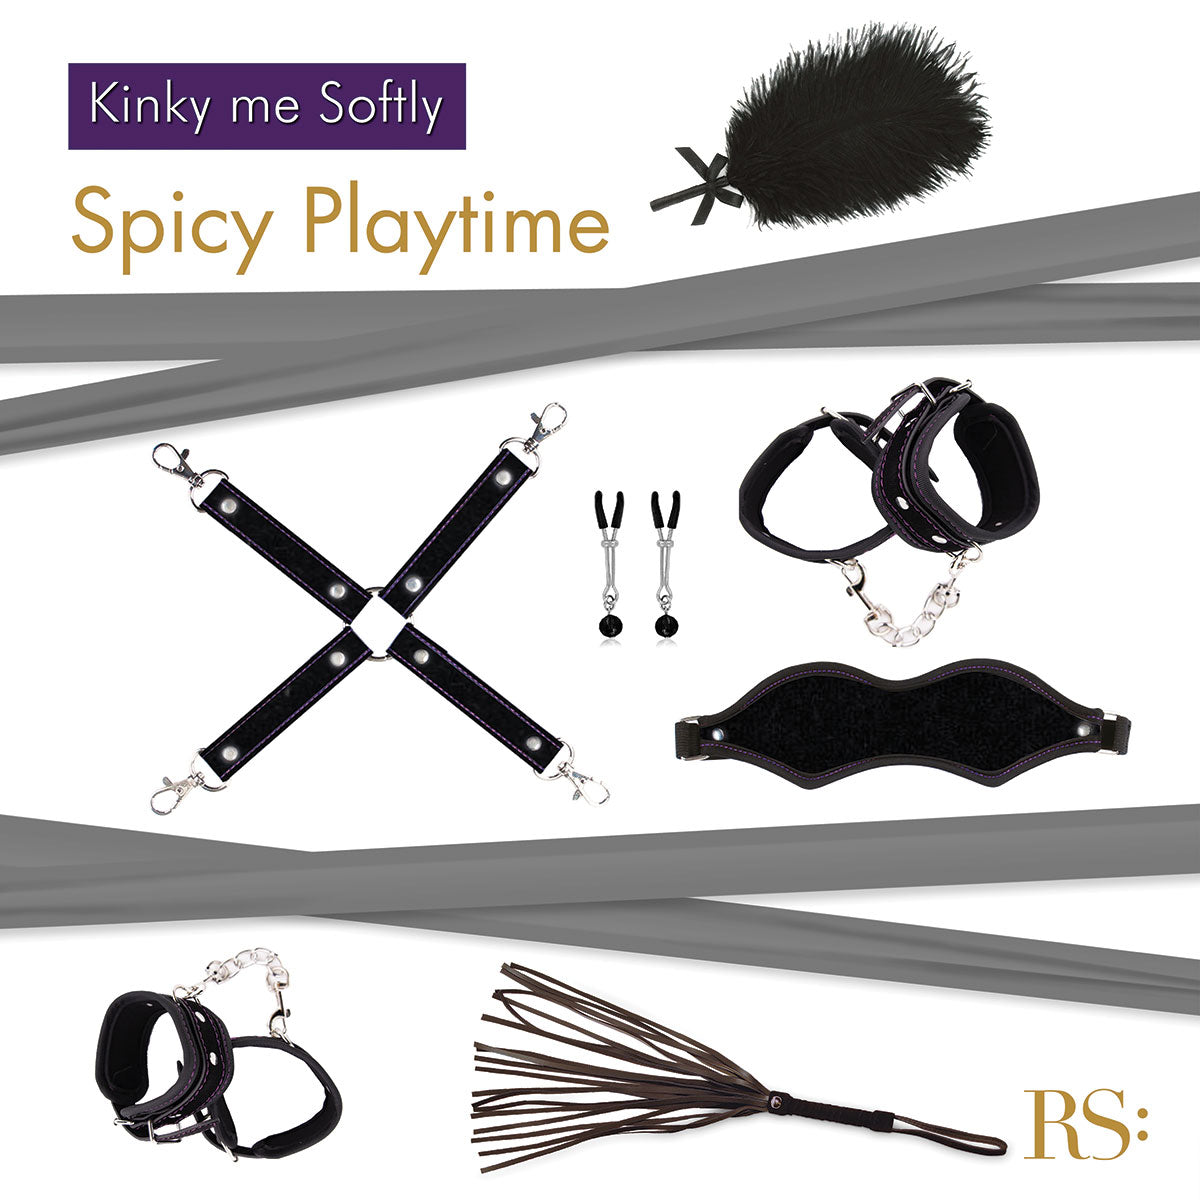 Rianne S Kinky Me Softly Bondage Kit - Assorted Colors